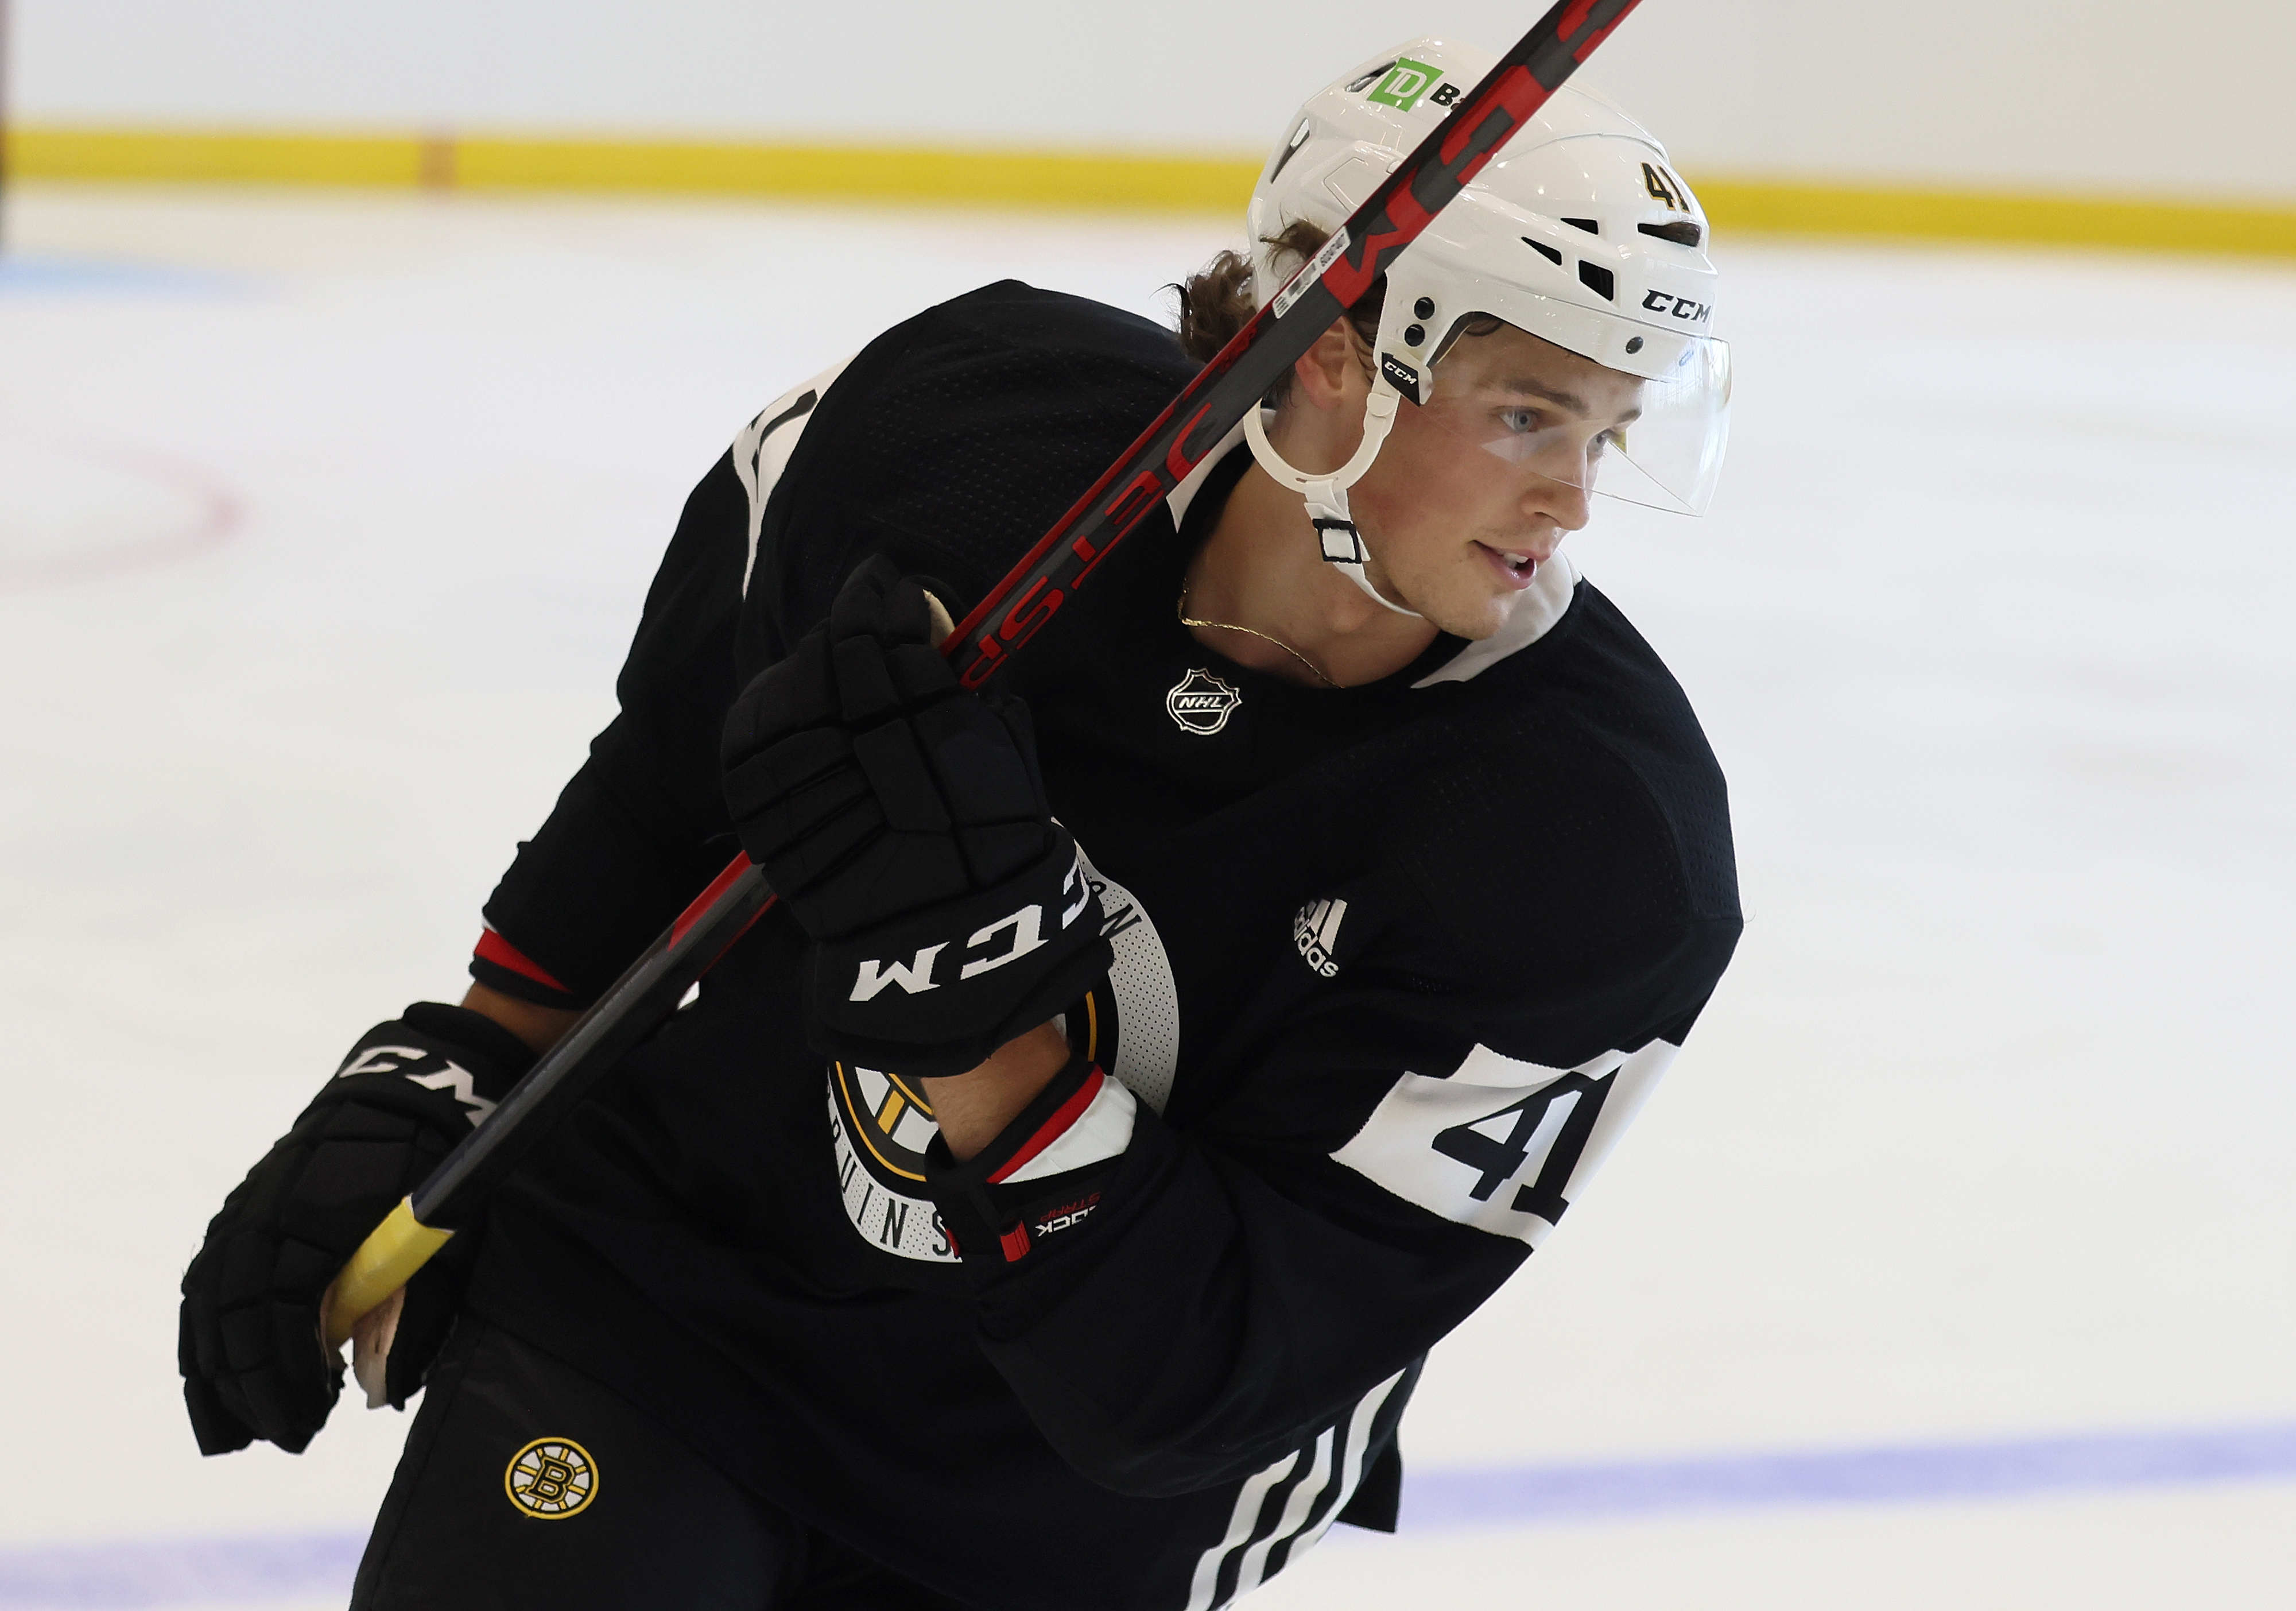 Georgii Merkulov Shines Despite the Providence Bruins Loss – Black